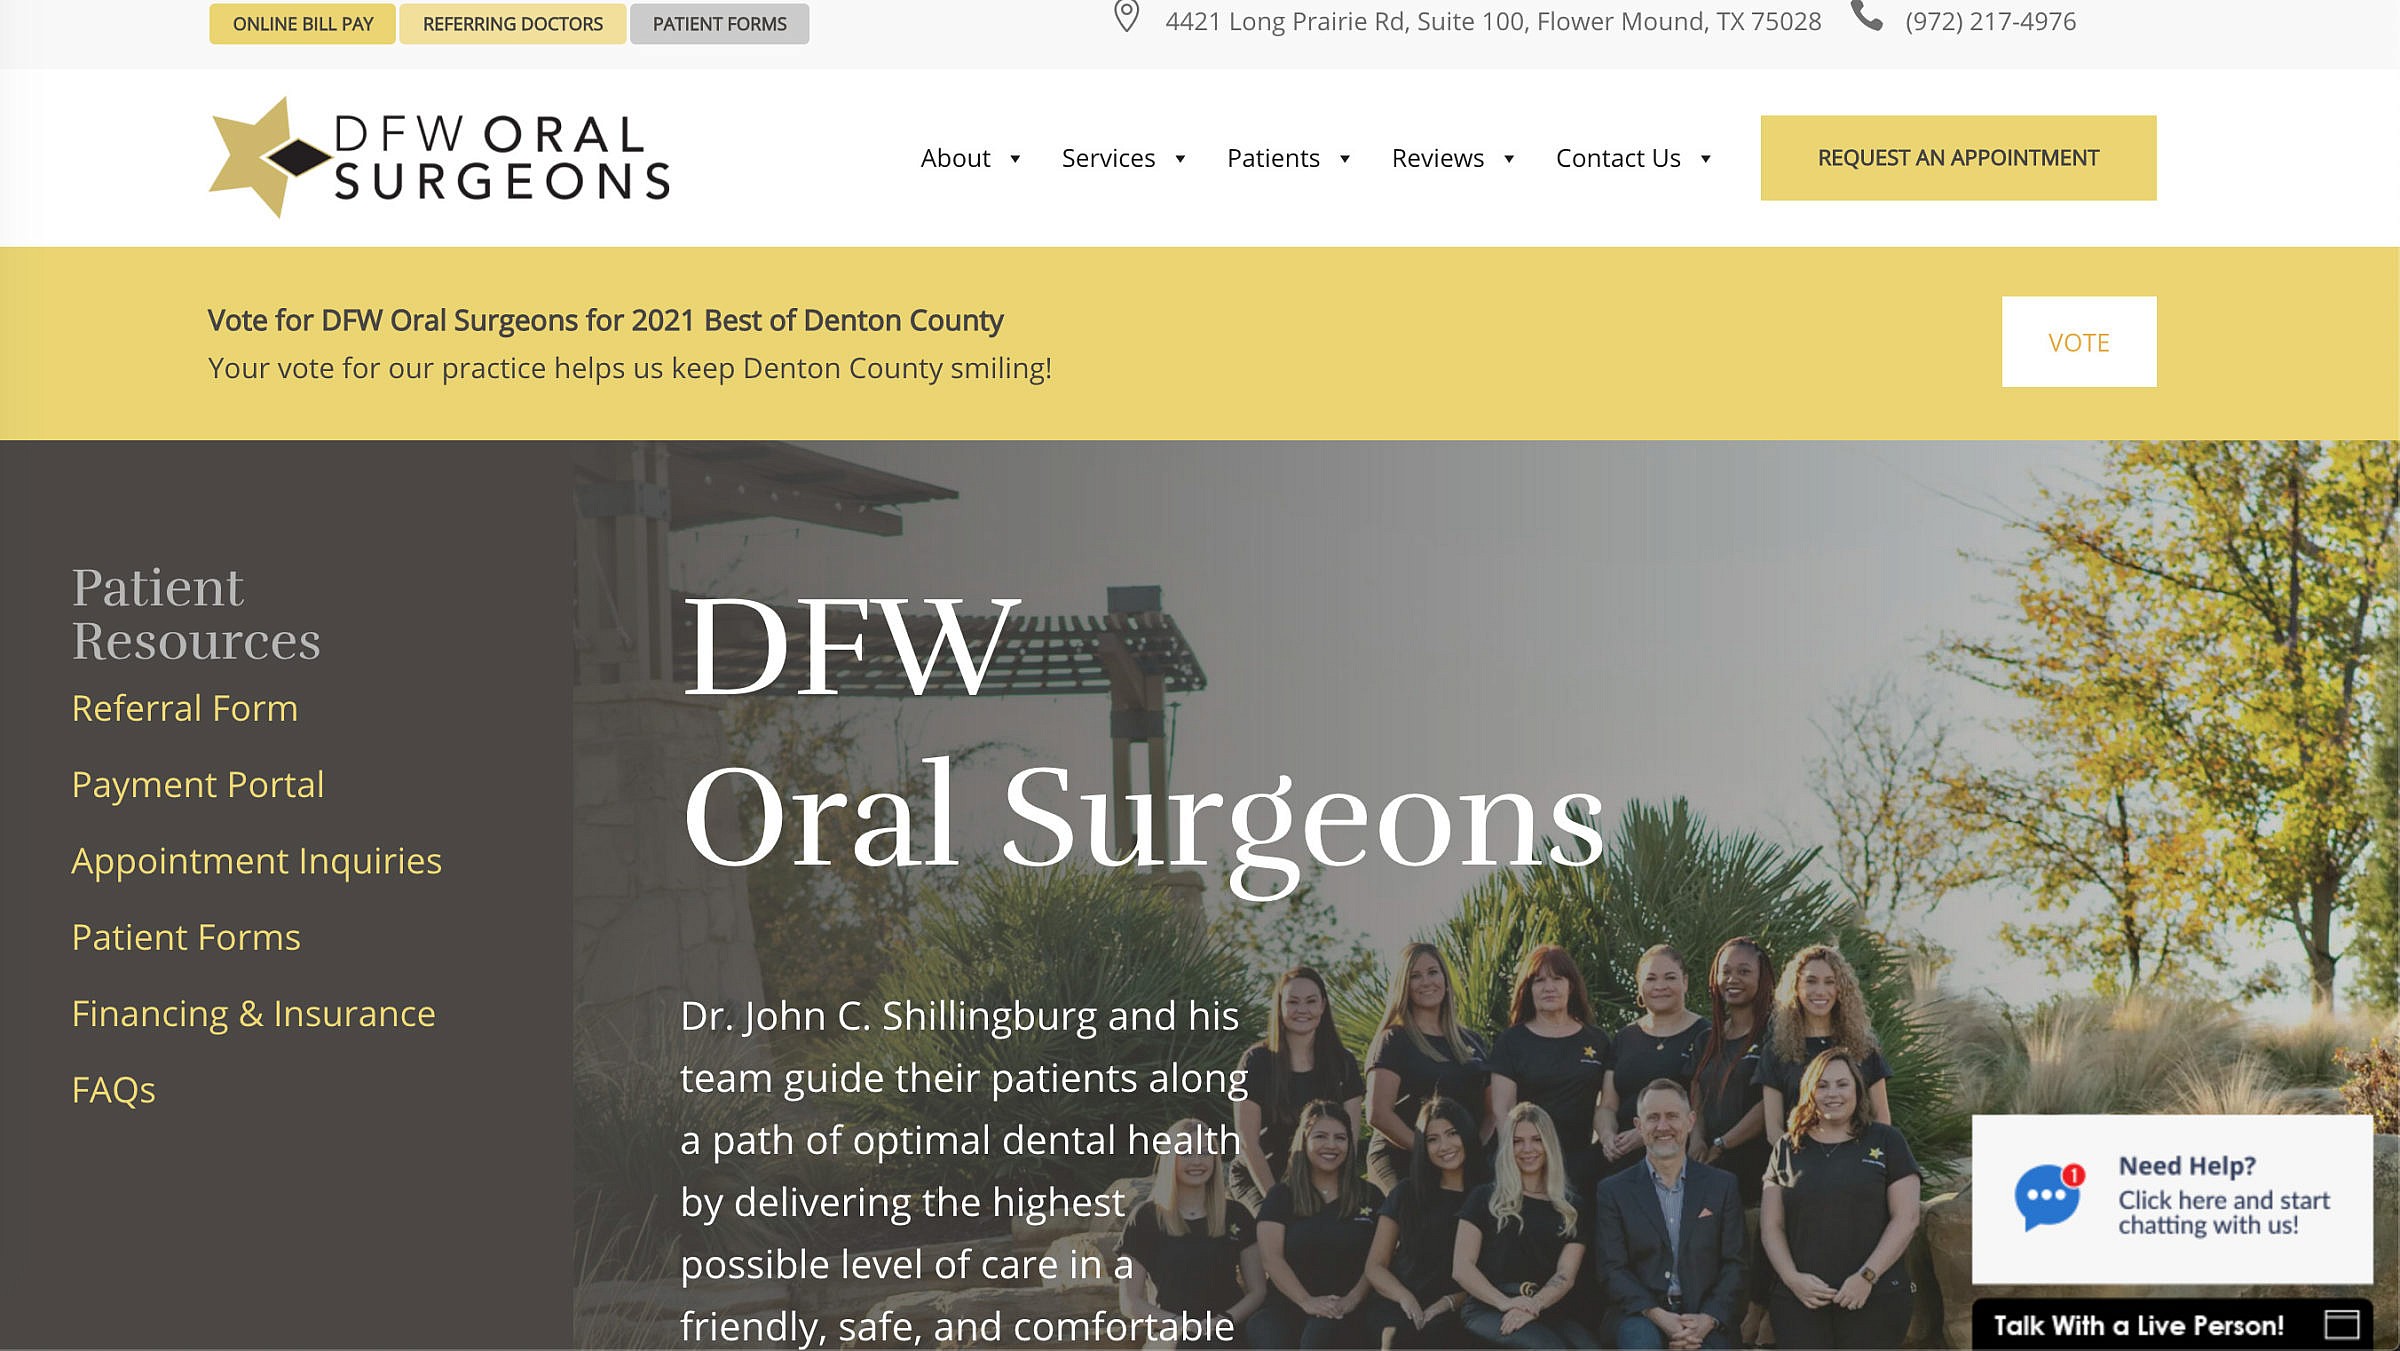 DFW Oral Surgeons